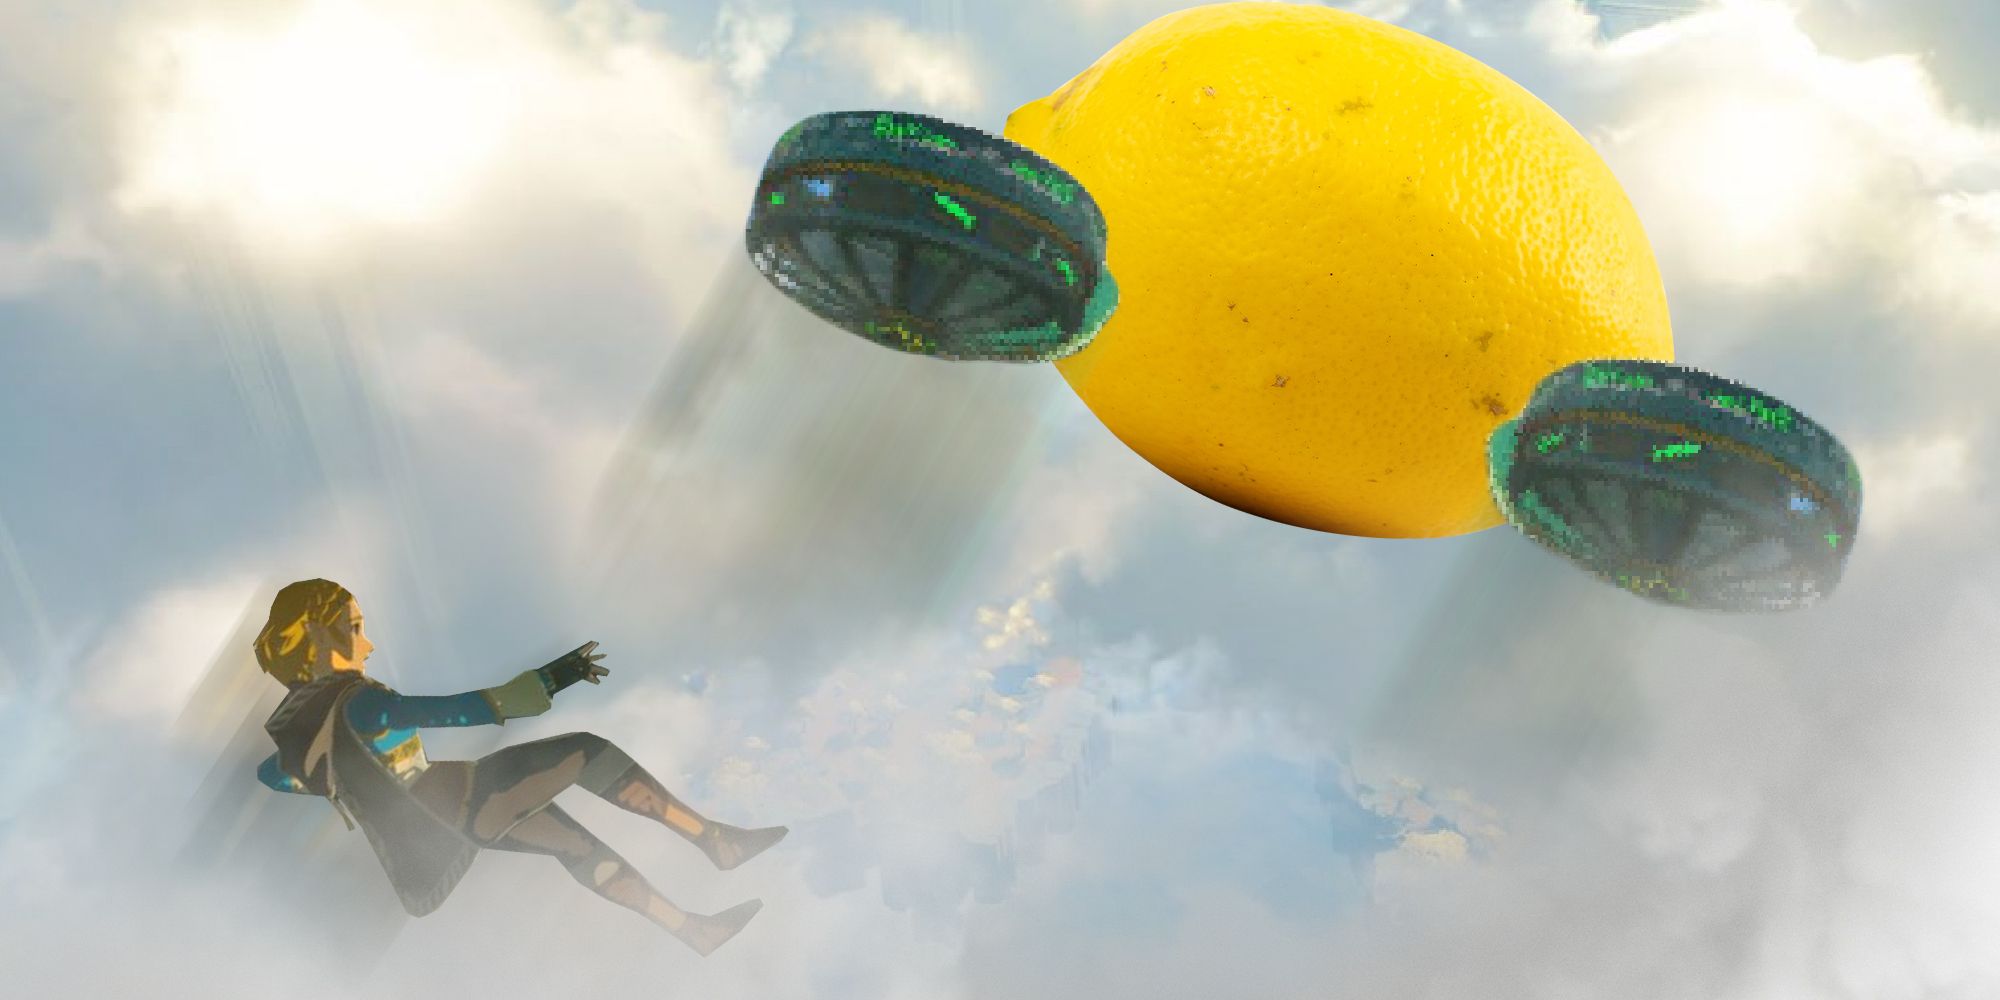 Zelda falling off a flying lemon